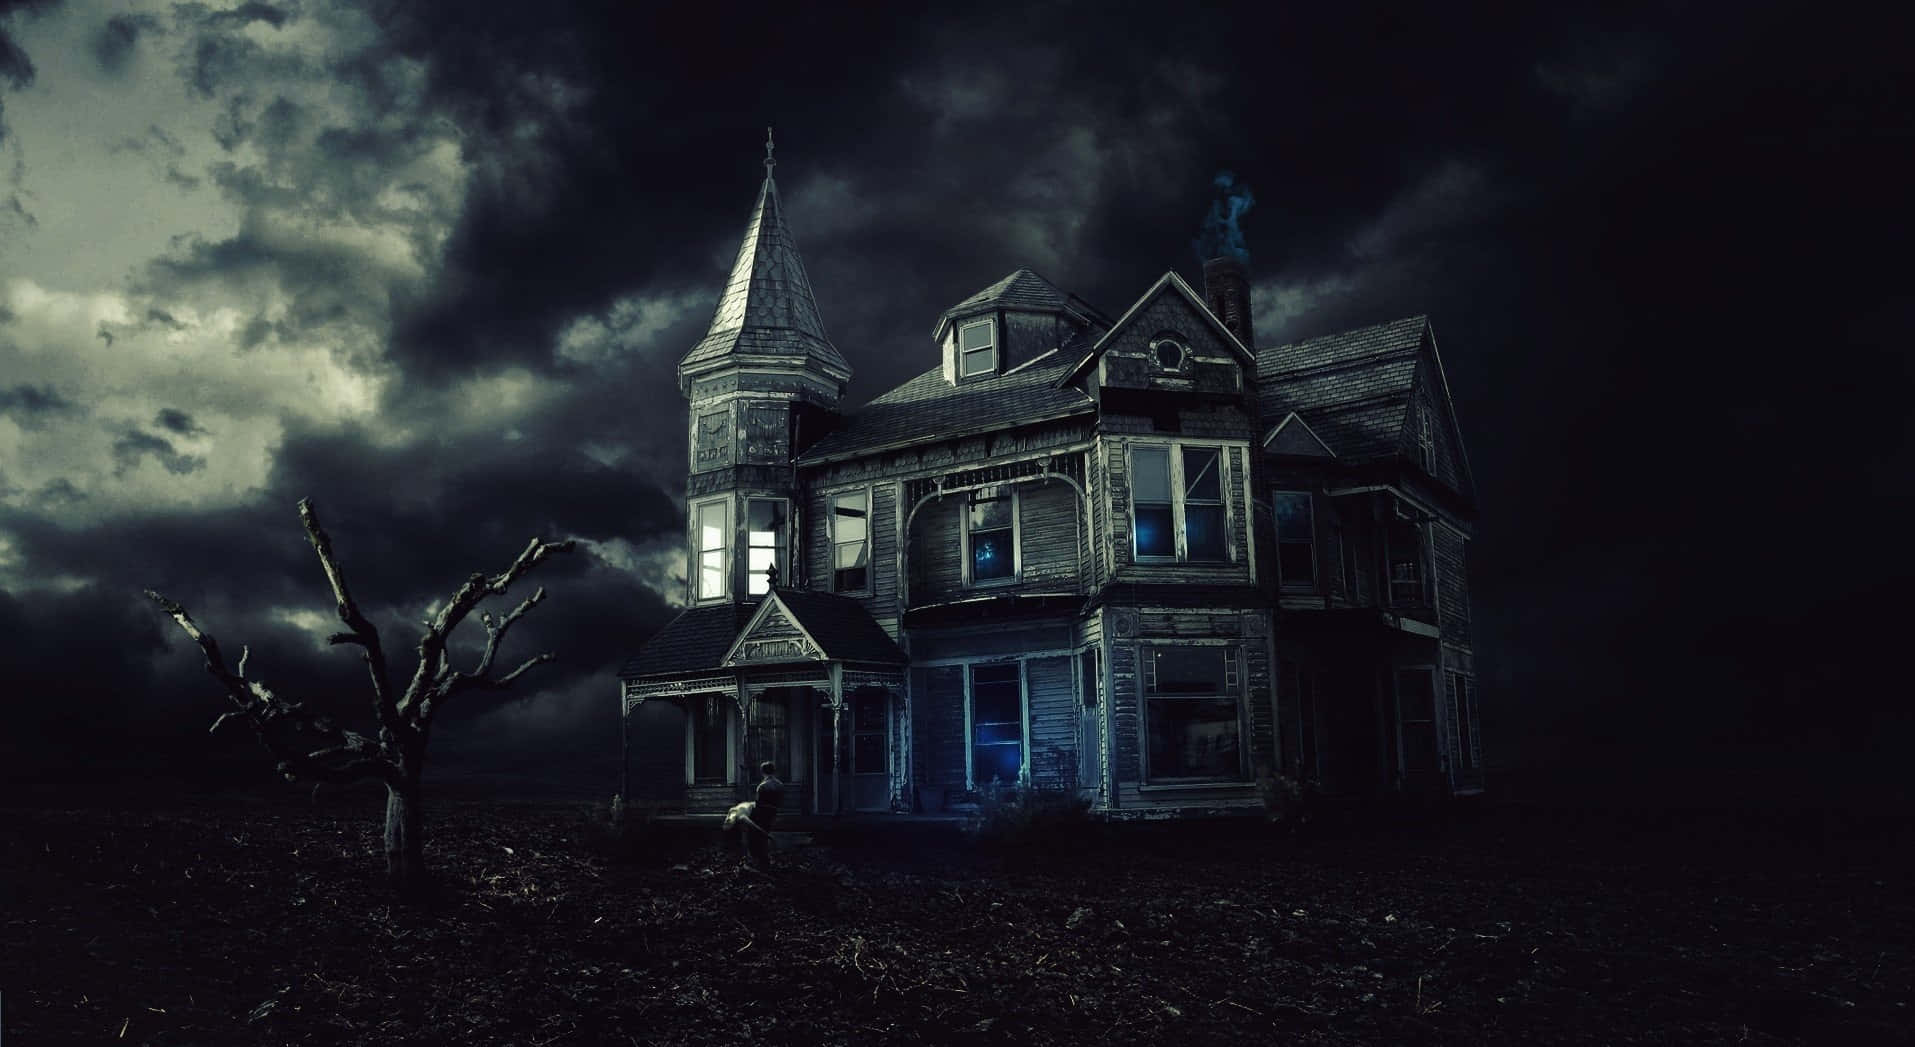 A Dark House With A Dark Sky